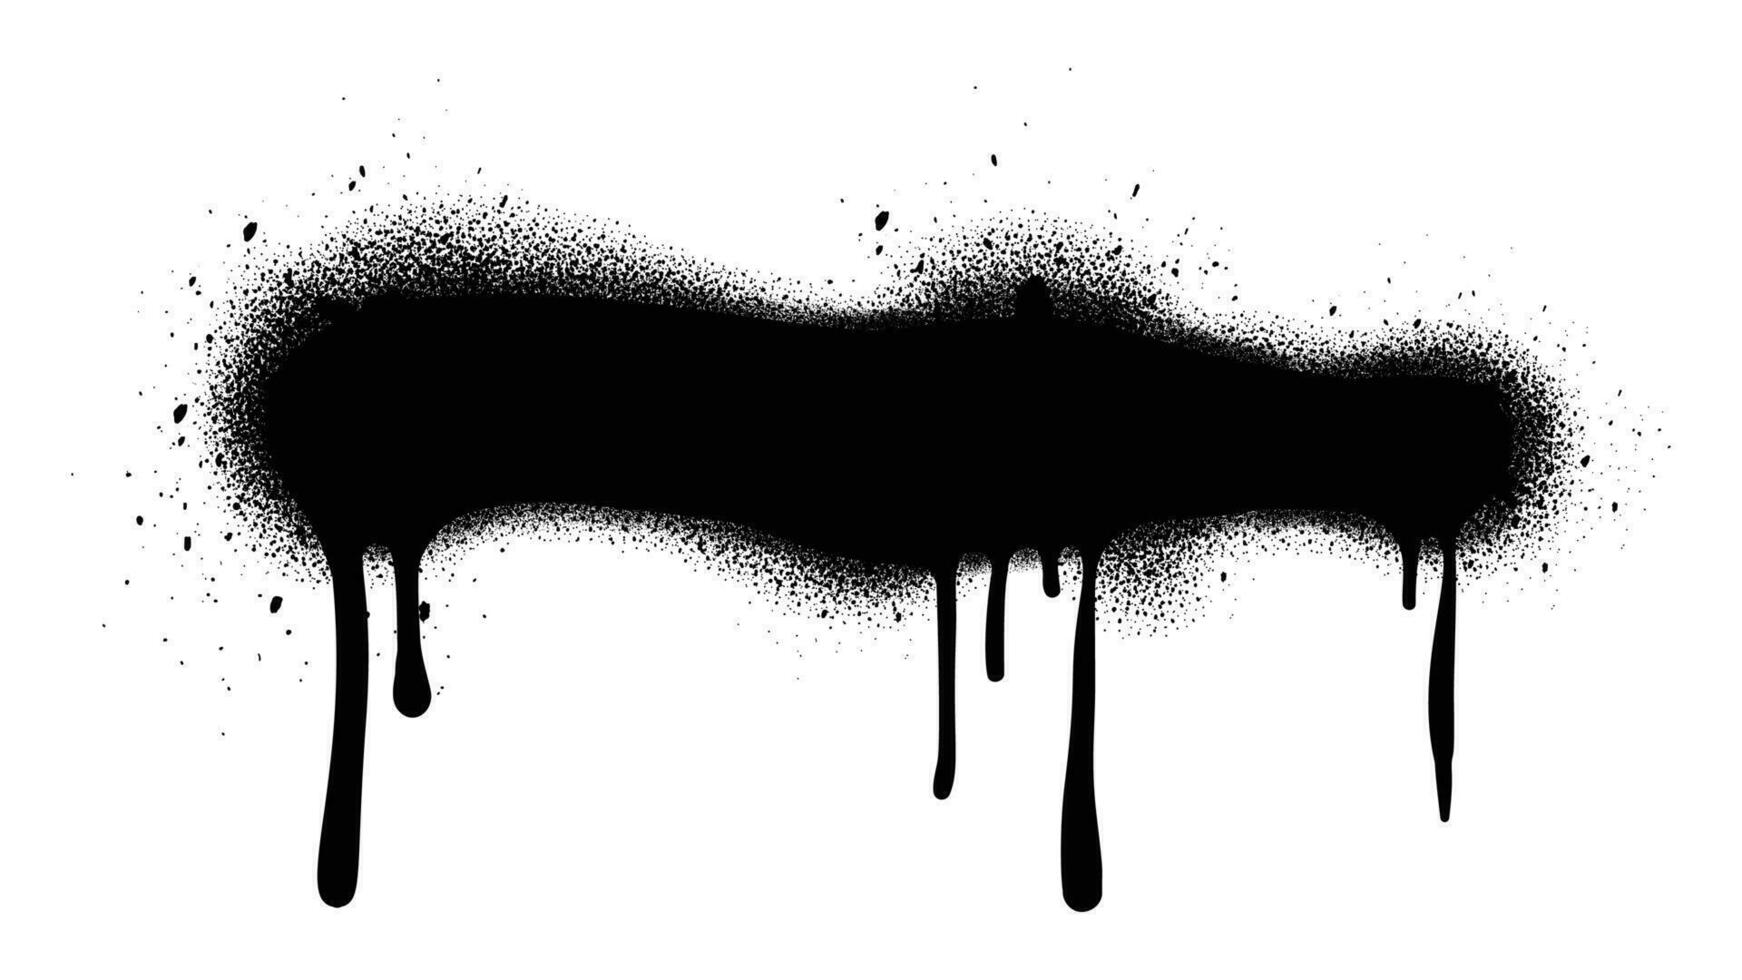 Abstract grungy graffiti black spray paint banner vector